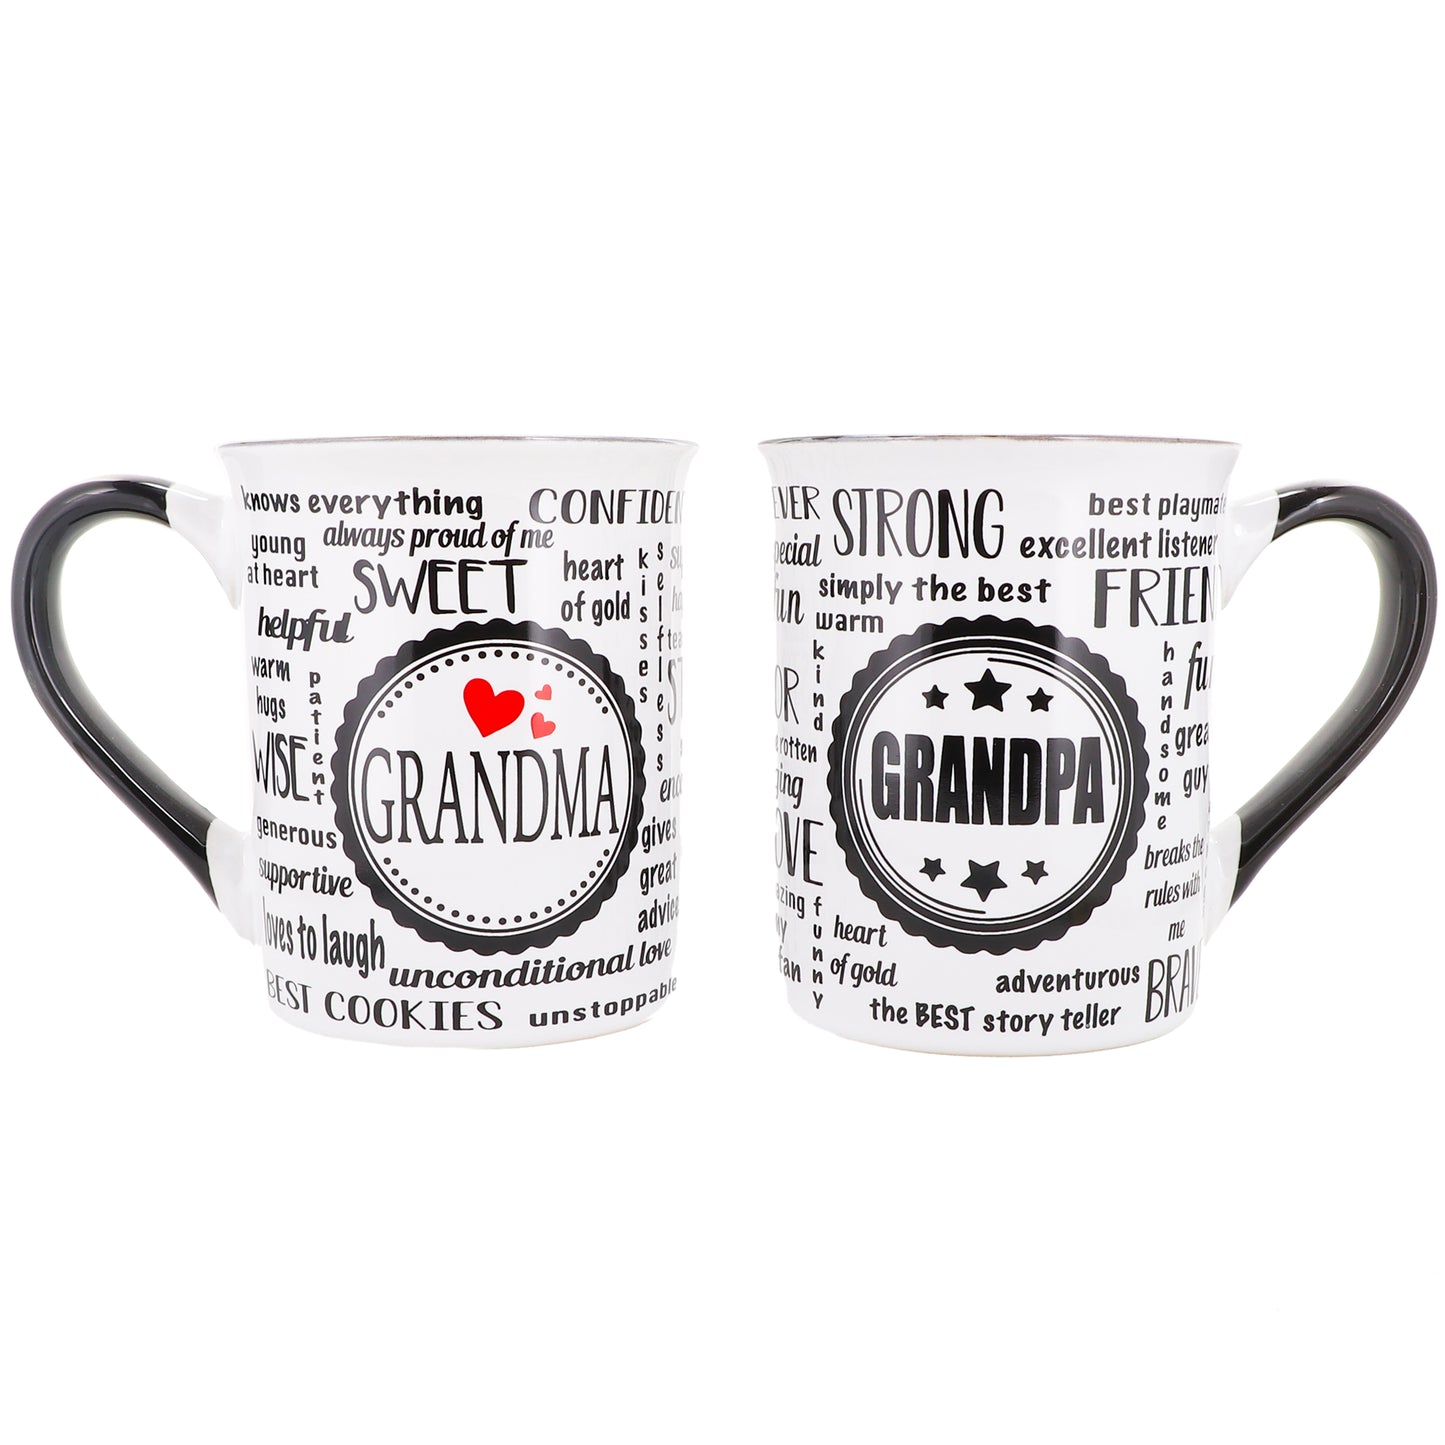 Cottage Creek Coffee Mug Set, Grandma and Grandpa Coffee Mug Set, Large Ceramic 16oz Set of Two Mugs with Black Handle, Grandma Mug, Grandpa Mug